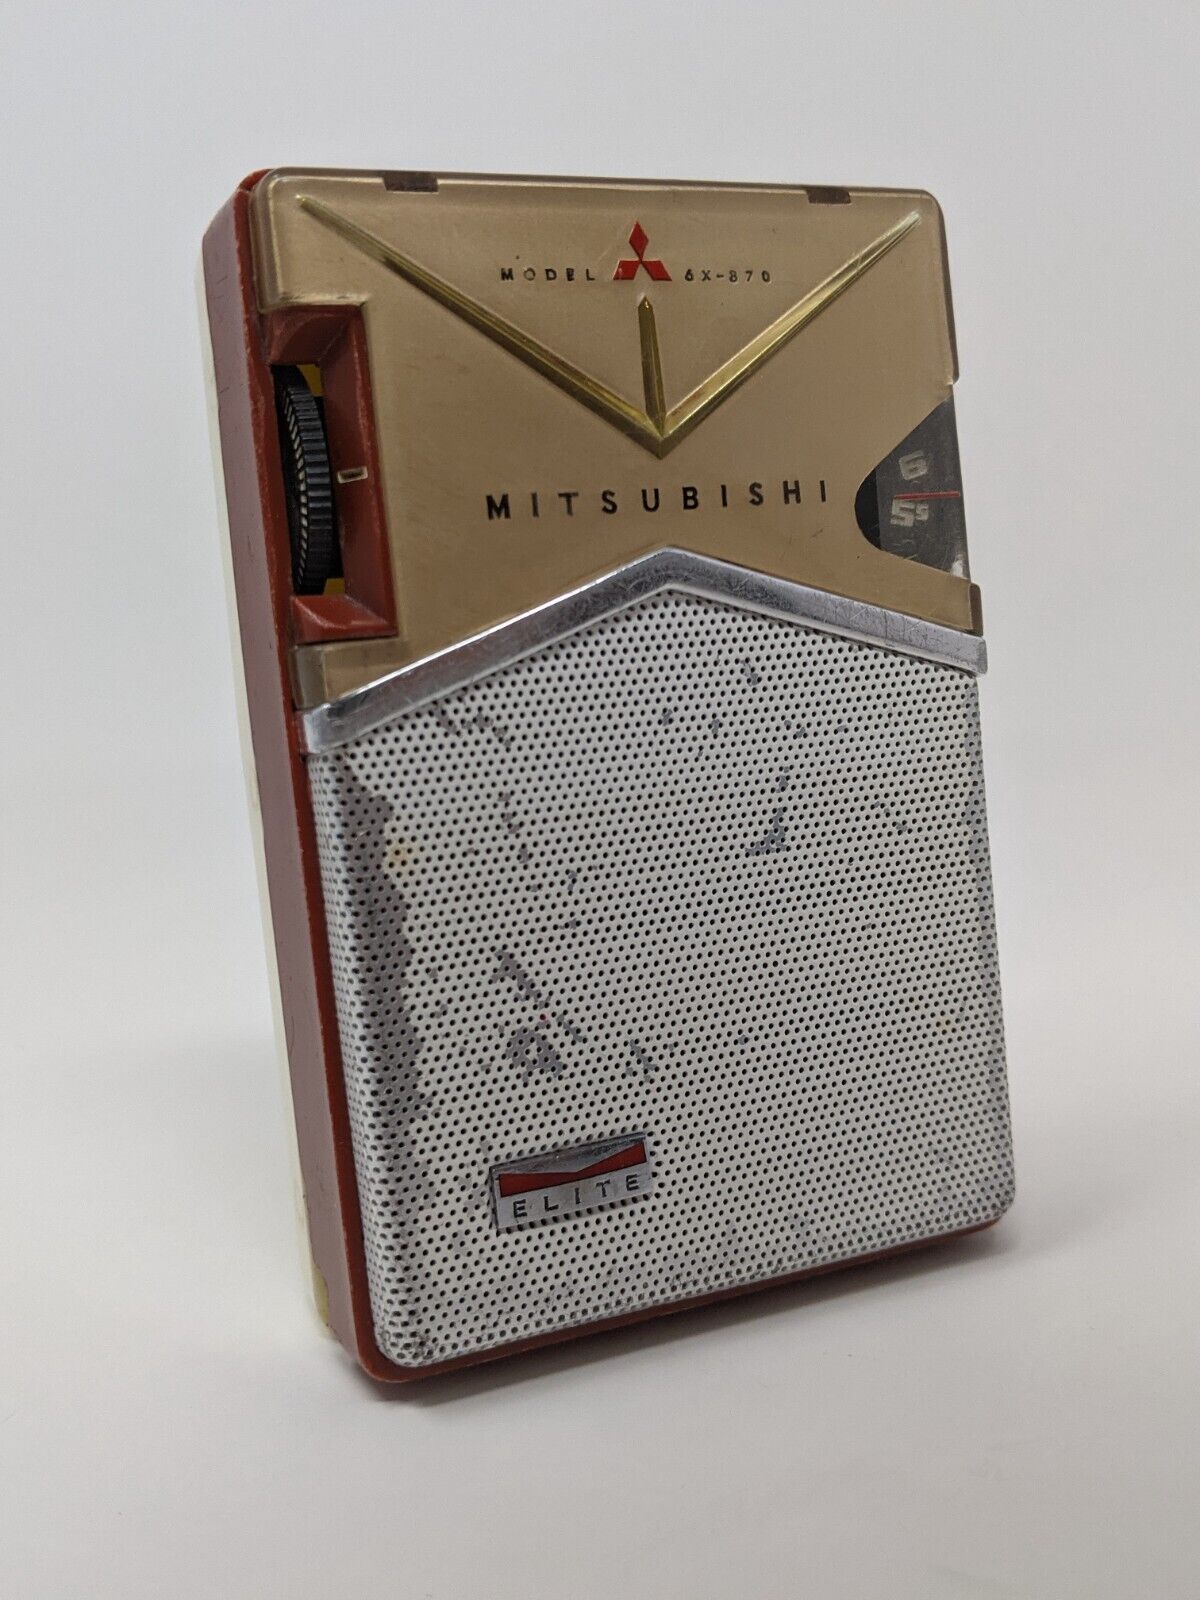 Vintage 1960s Mitsubishi AM Transistor Elite Radio 6X-870 ~ Rare Works